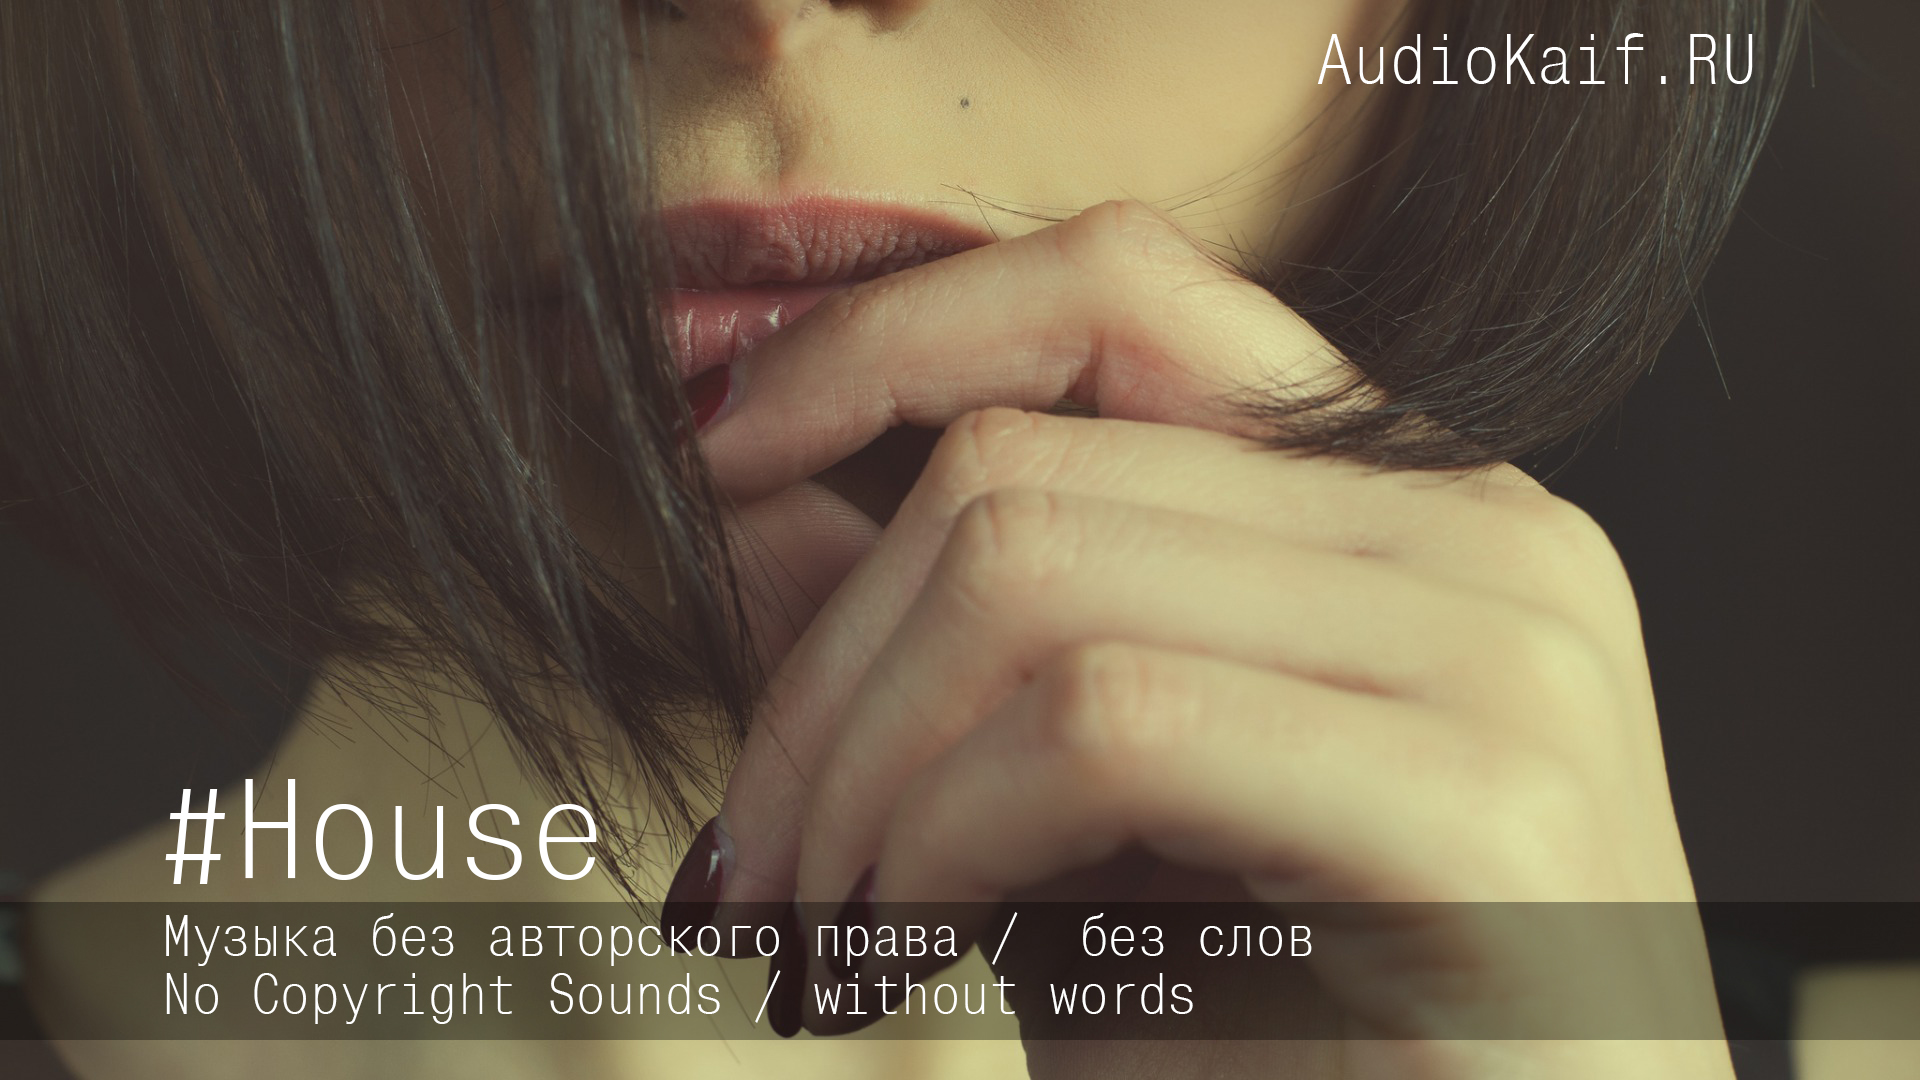 Музыка без авторского права / Flexxus Feathers / House / AudioKaif RU